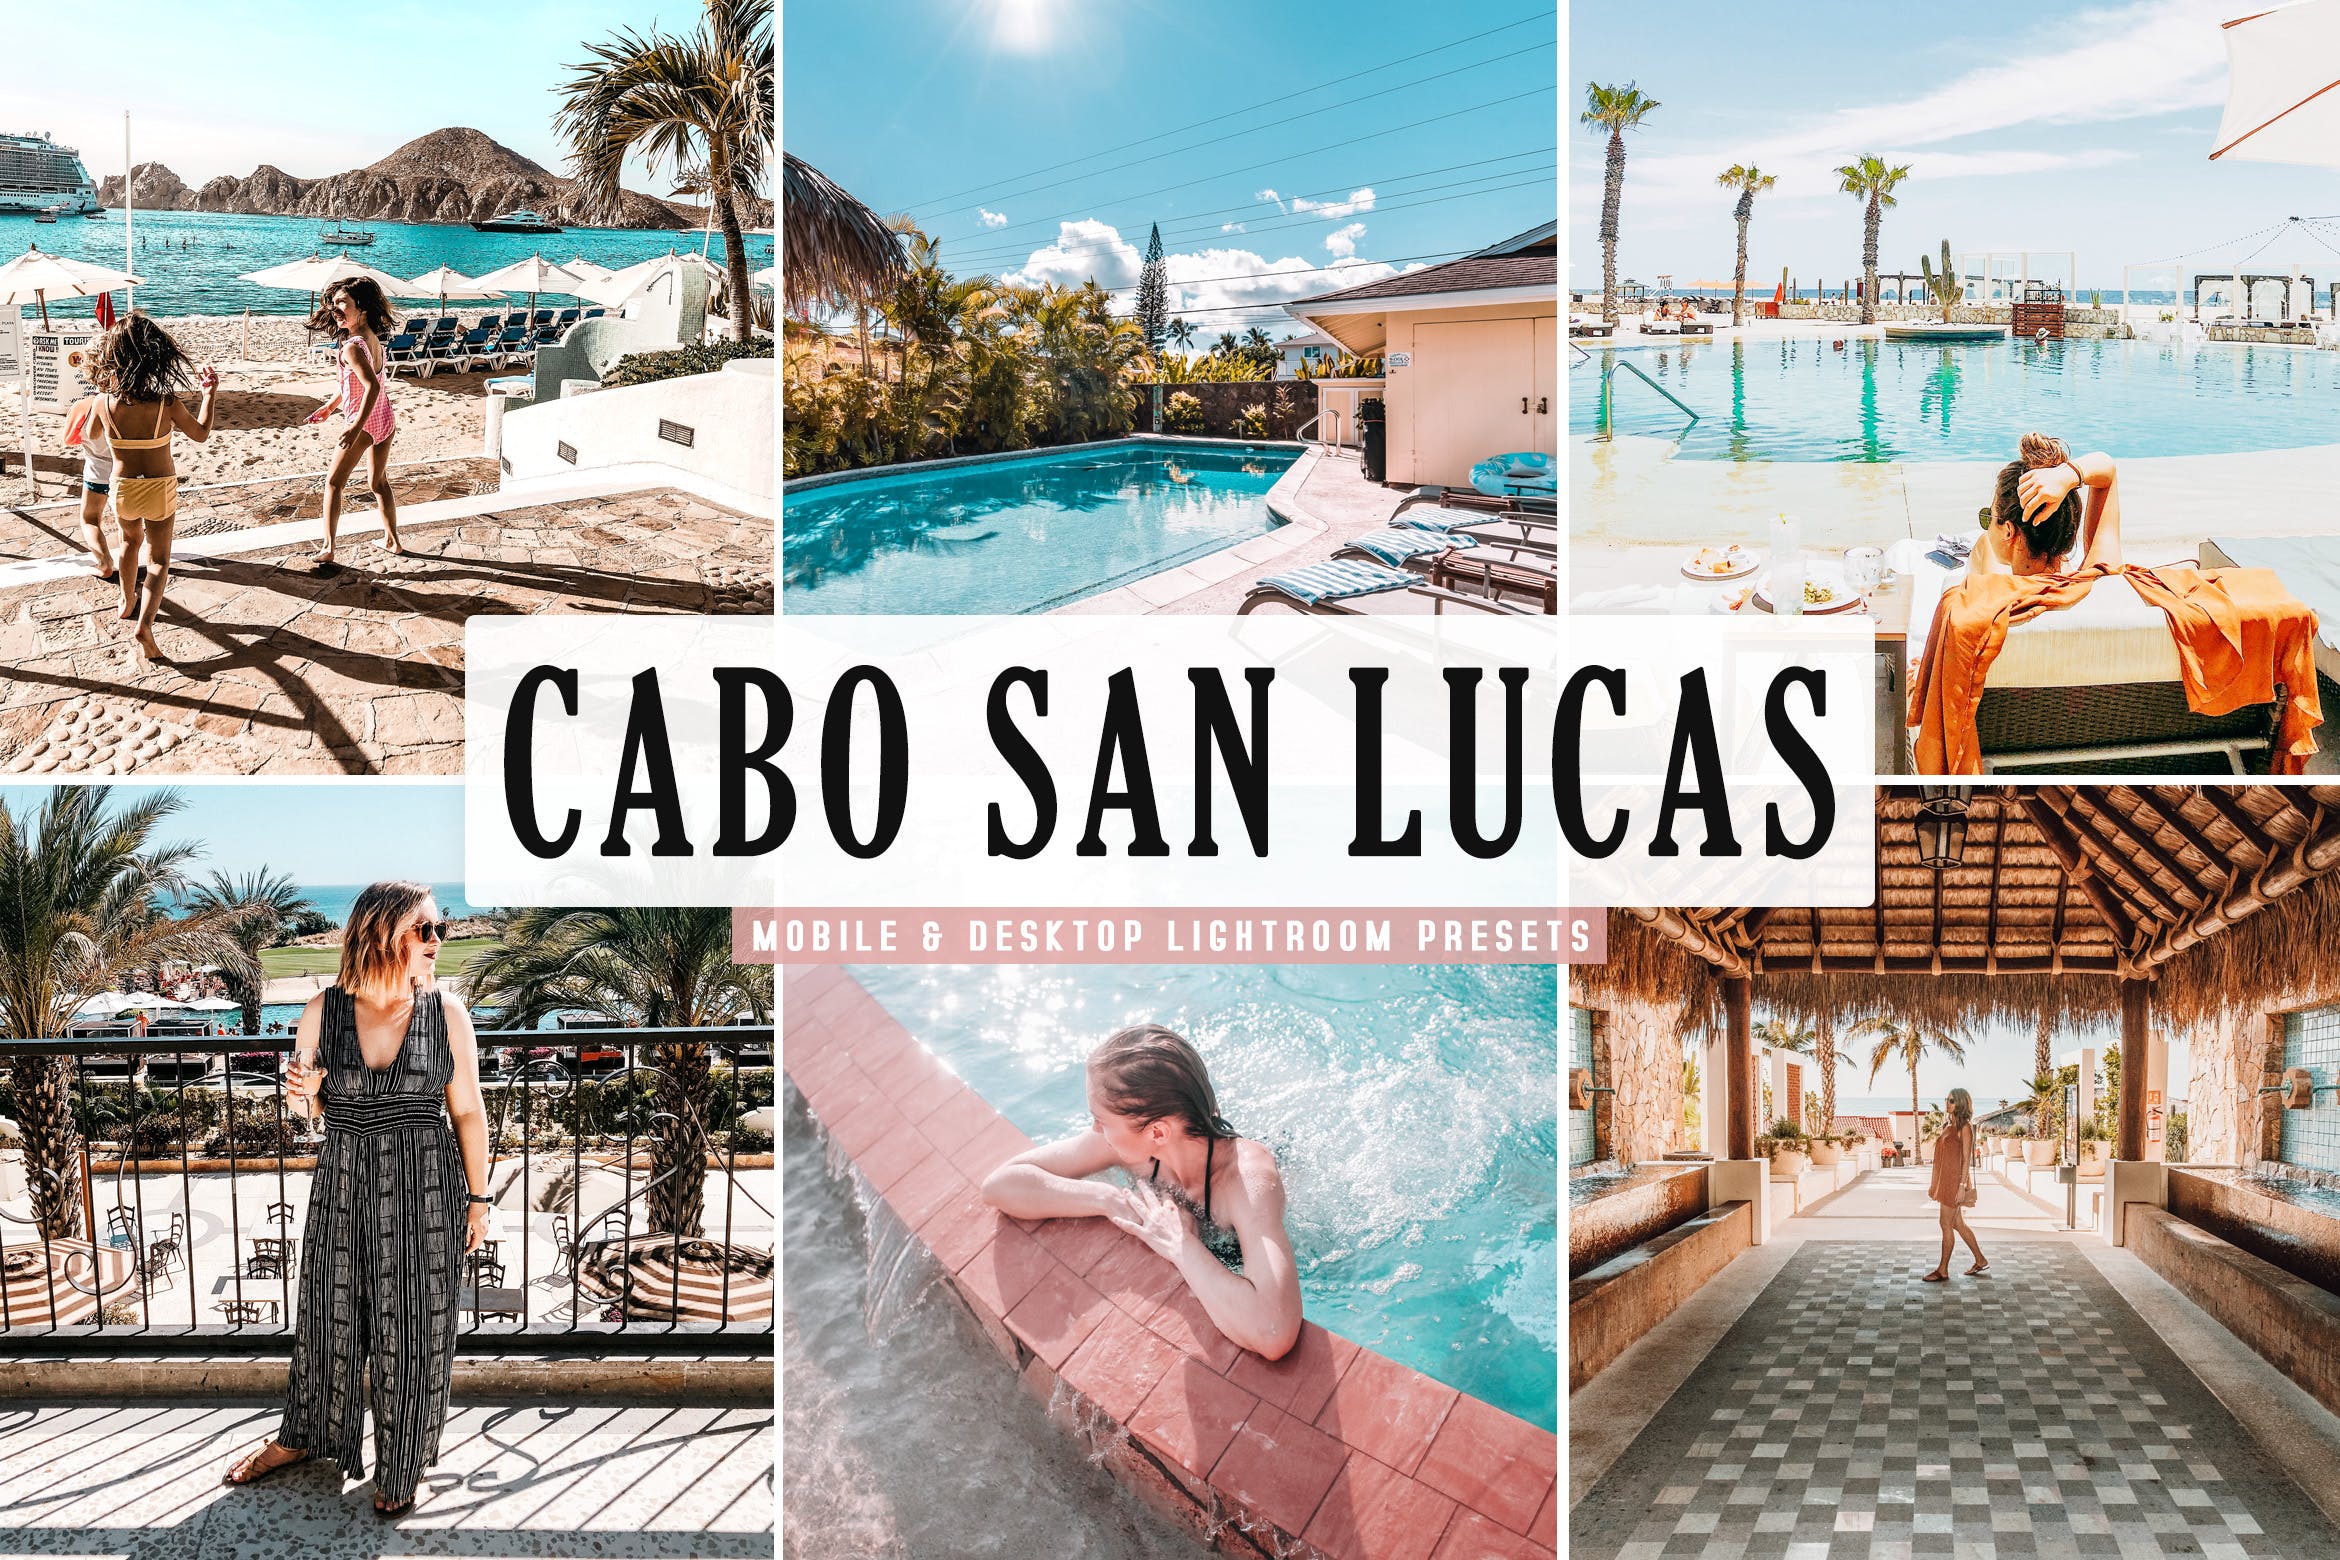 日光摄影照片后期调色滤镜Lightroom预设 Cabo San Lucas Mobile & Desktop Lightroom Presets插图